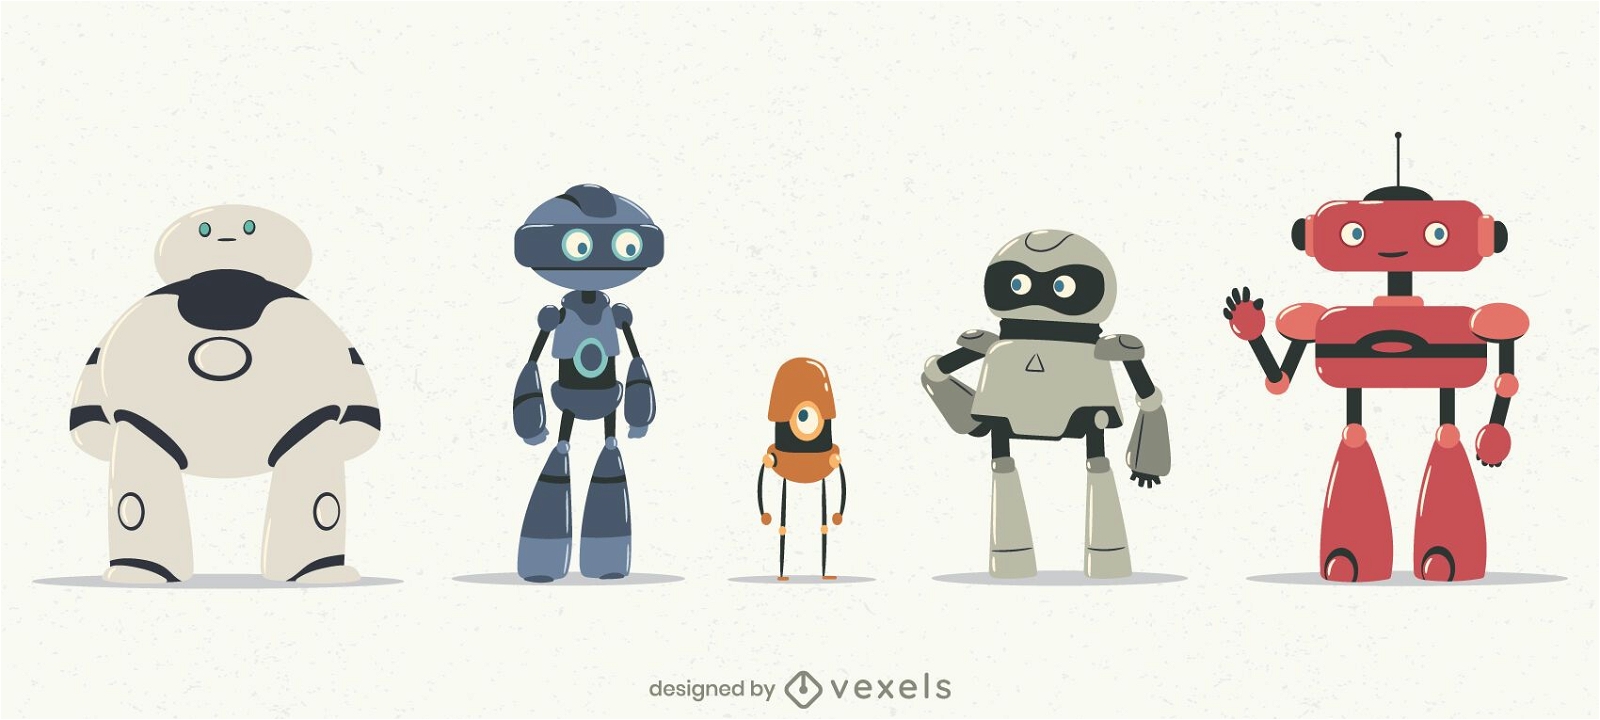 Robot character set design